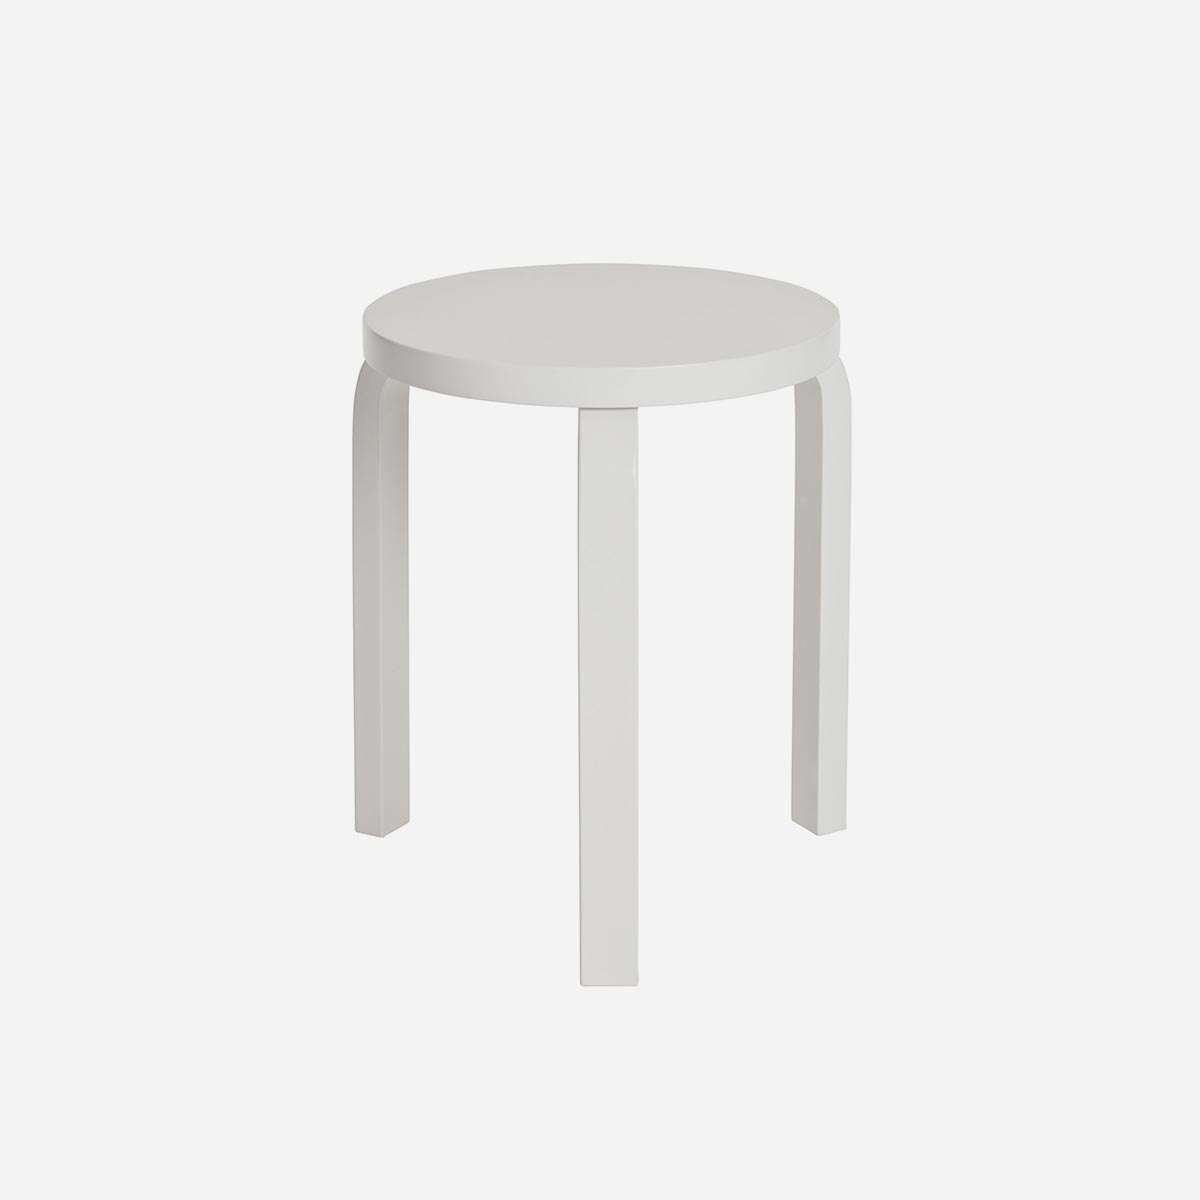 product-color-Seduta Bianca/Gambe Bianche, White Seat/White Legs